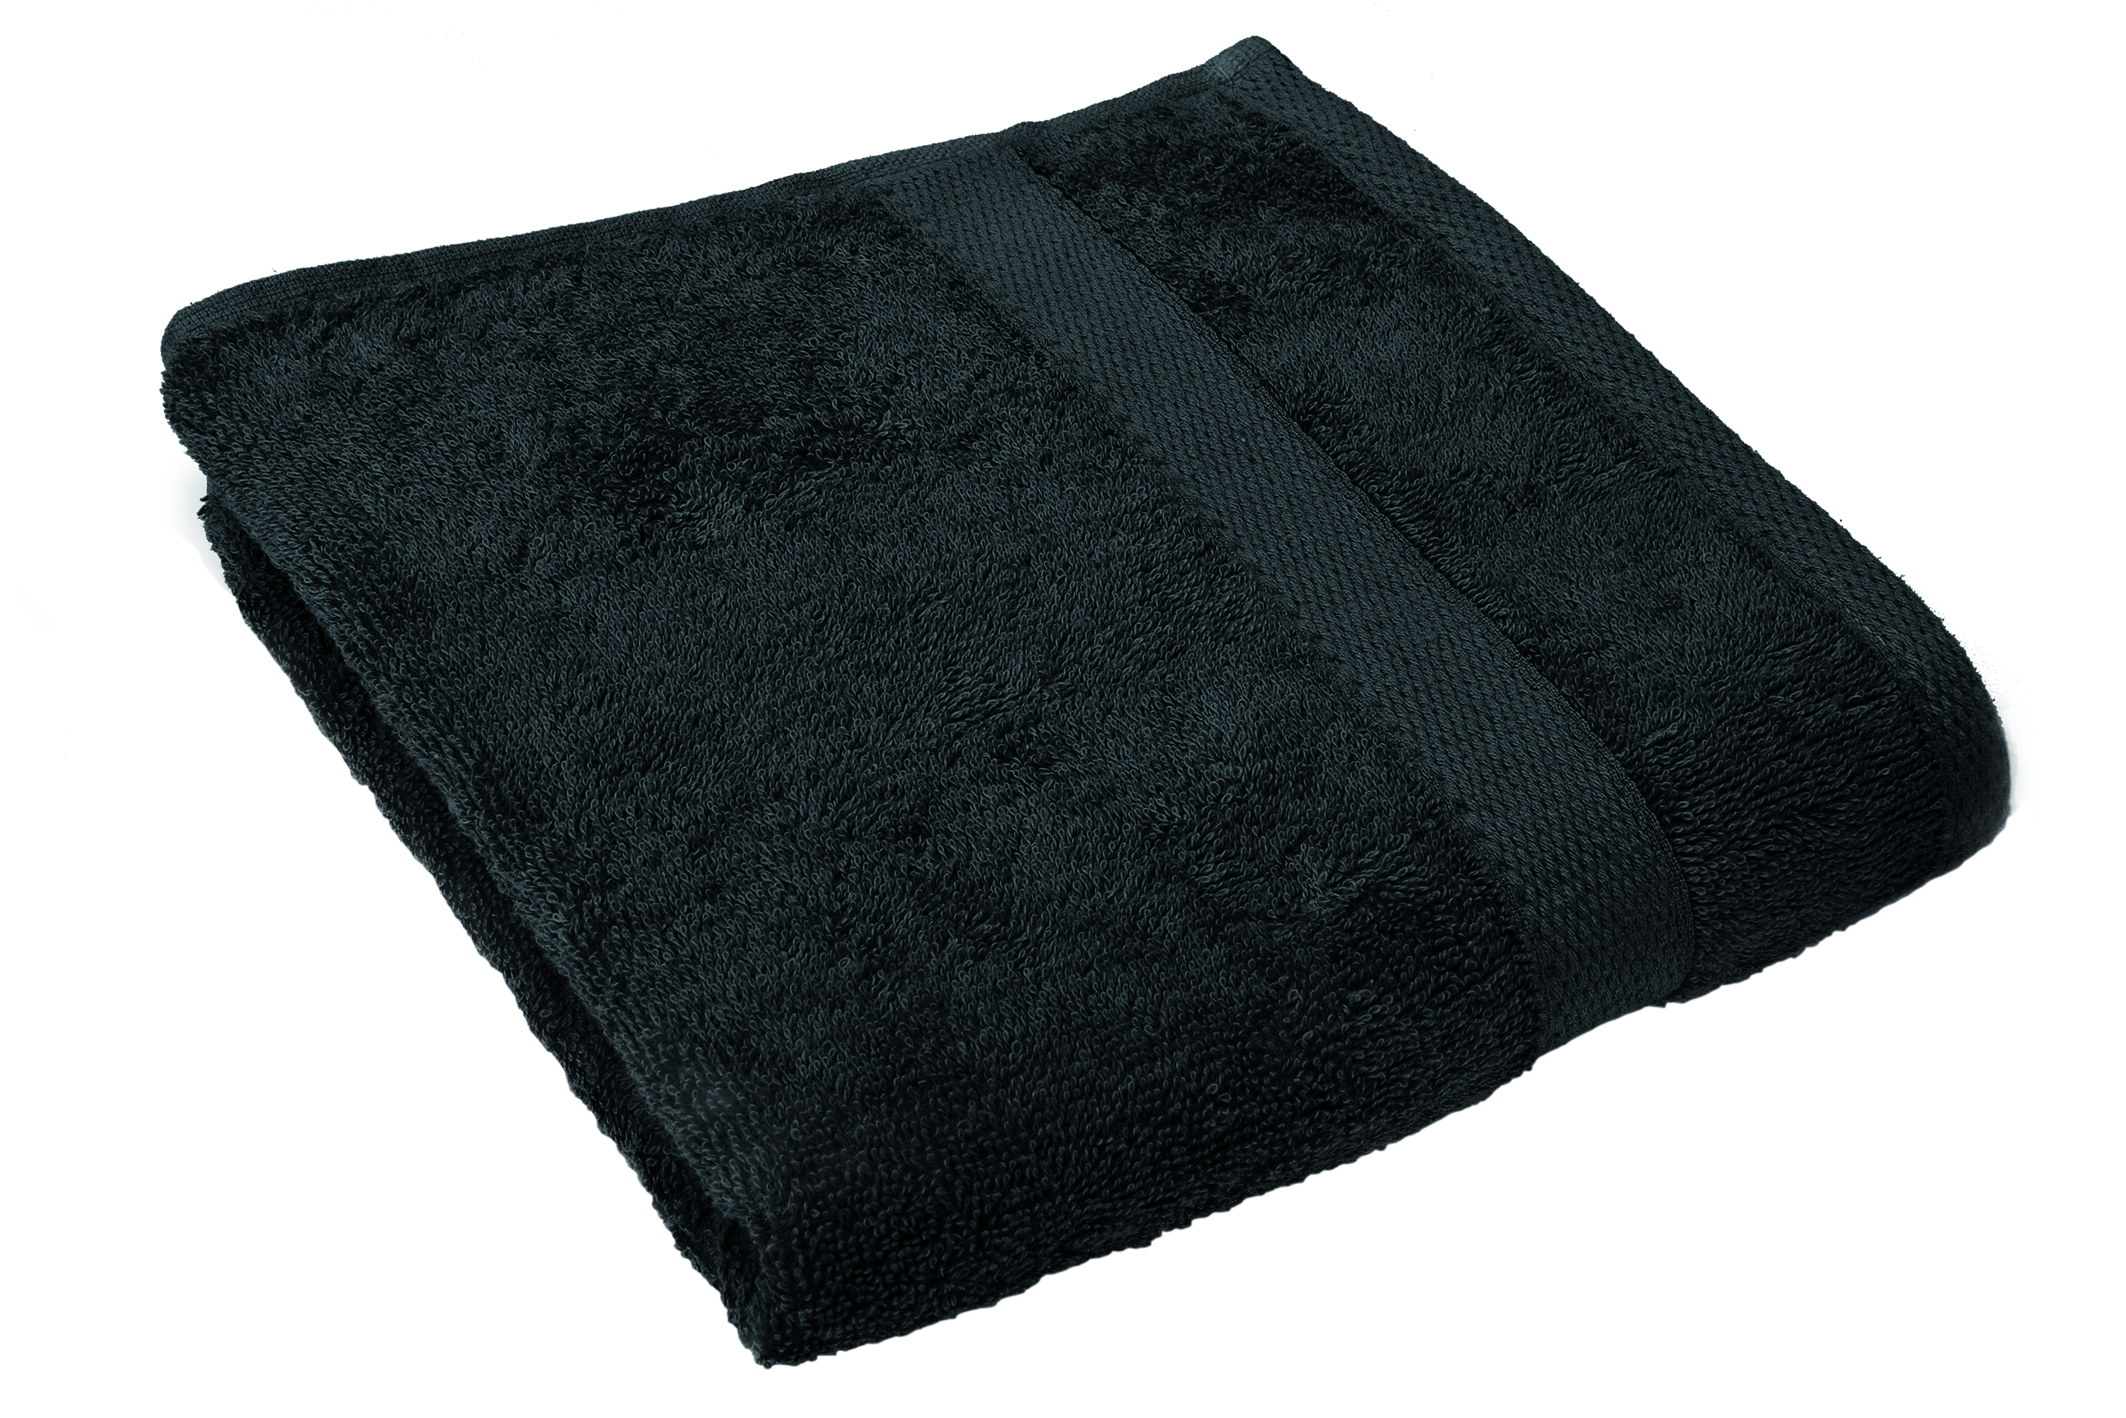 Shower towel 100x150cm, black